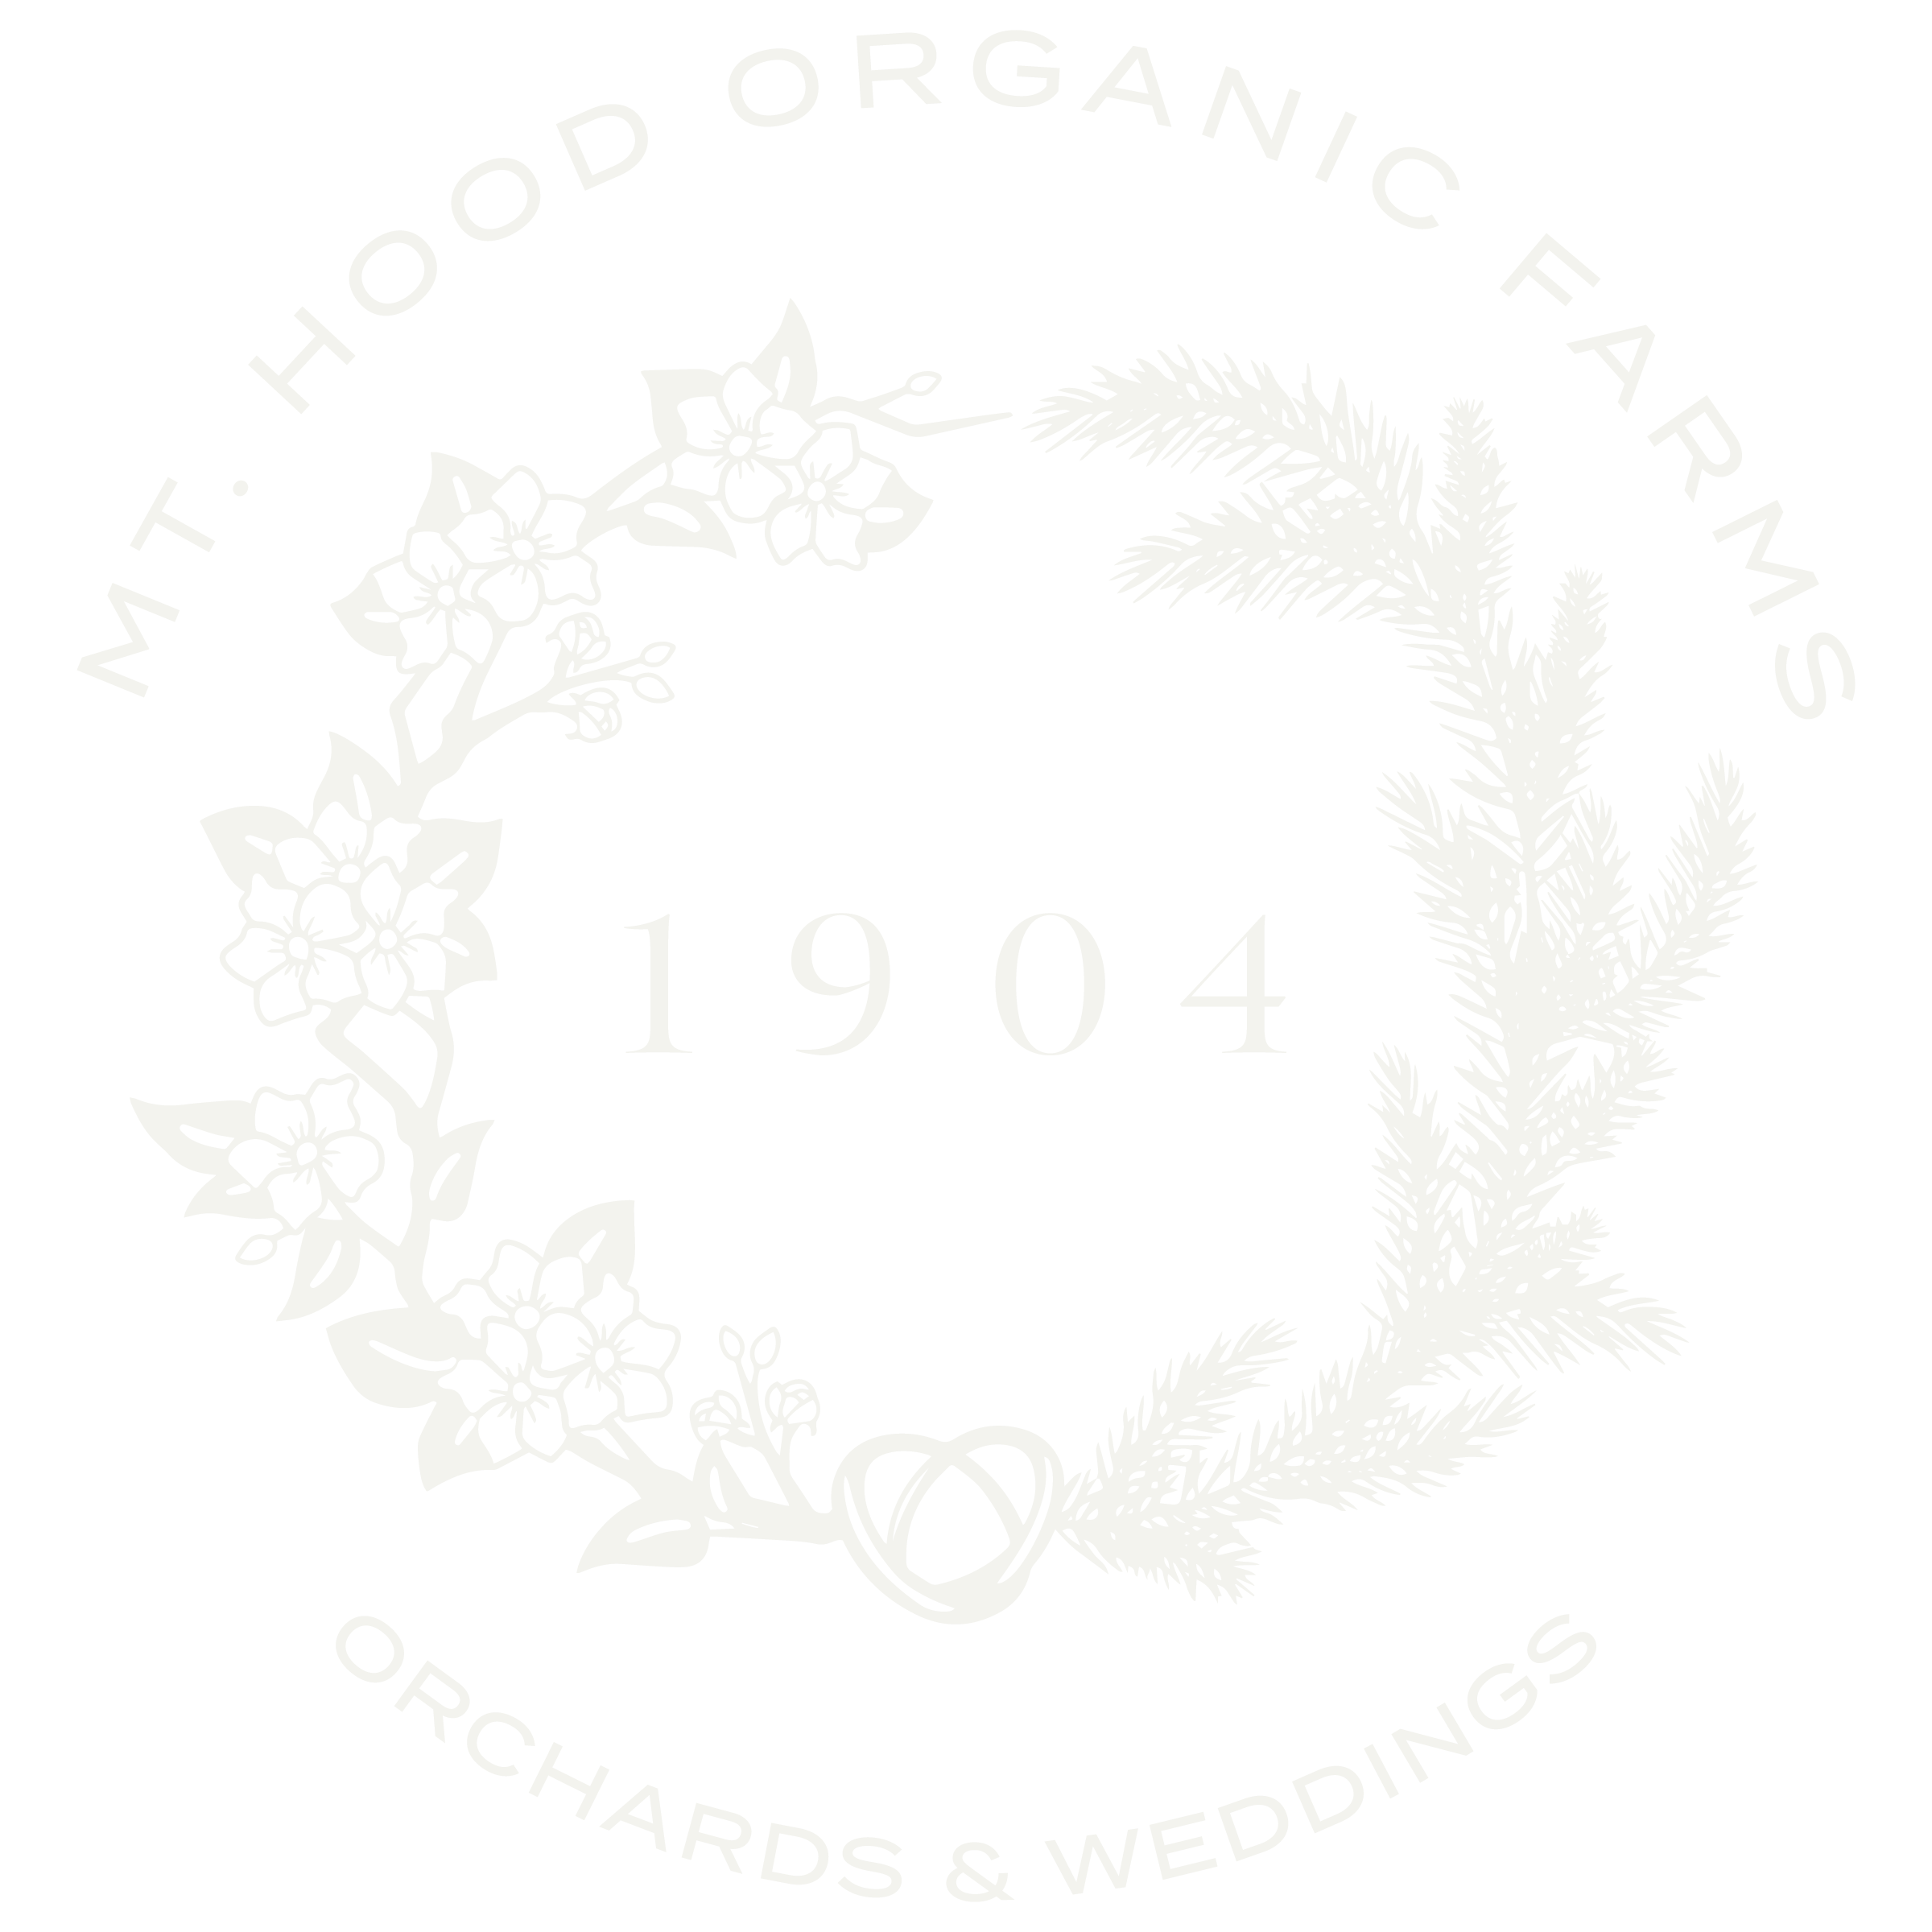 Bulk Organic & Biodynamic Mixed Heirloom Apples, 3 lb, Mt. Hood Organic  Farms